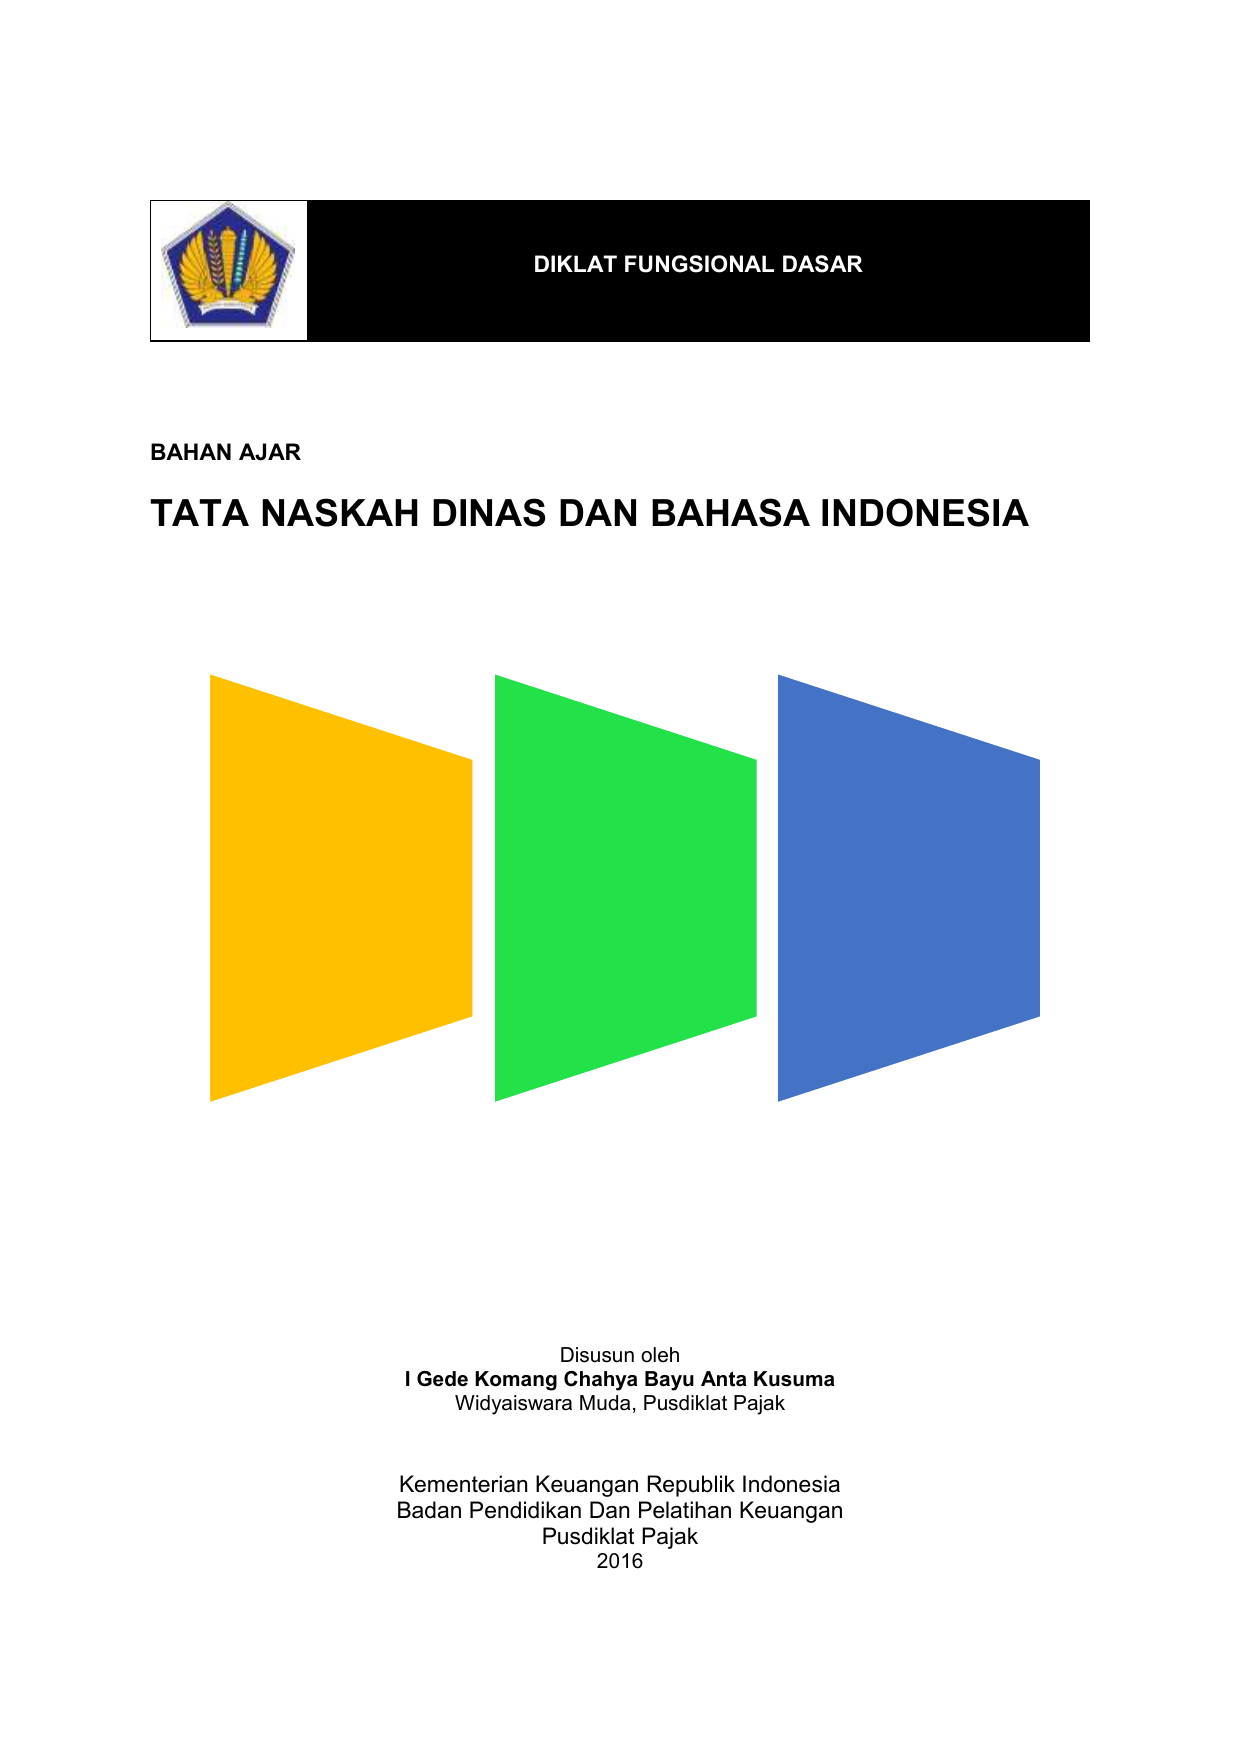 INDONESIA Disusun oleh I Gede Komang Chahya Bayu Anta Kusuma Widyaiswara Muda Pusdiklat Pajak Kementerian Keuangan Republik Indonesia Badan Pendidikan